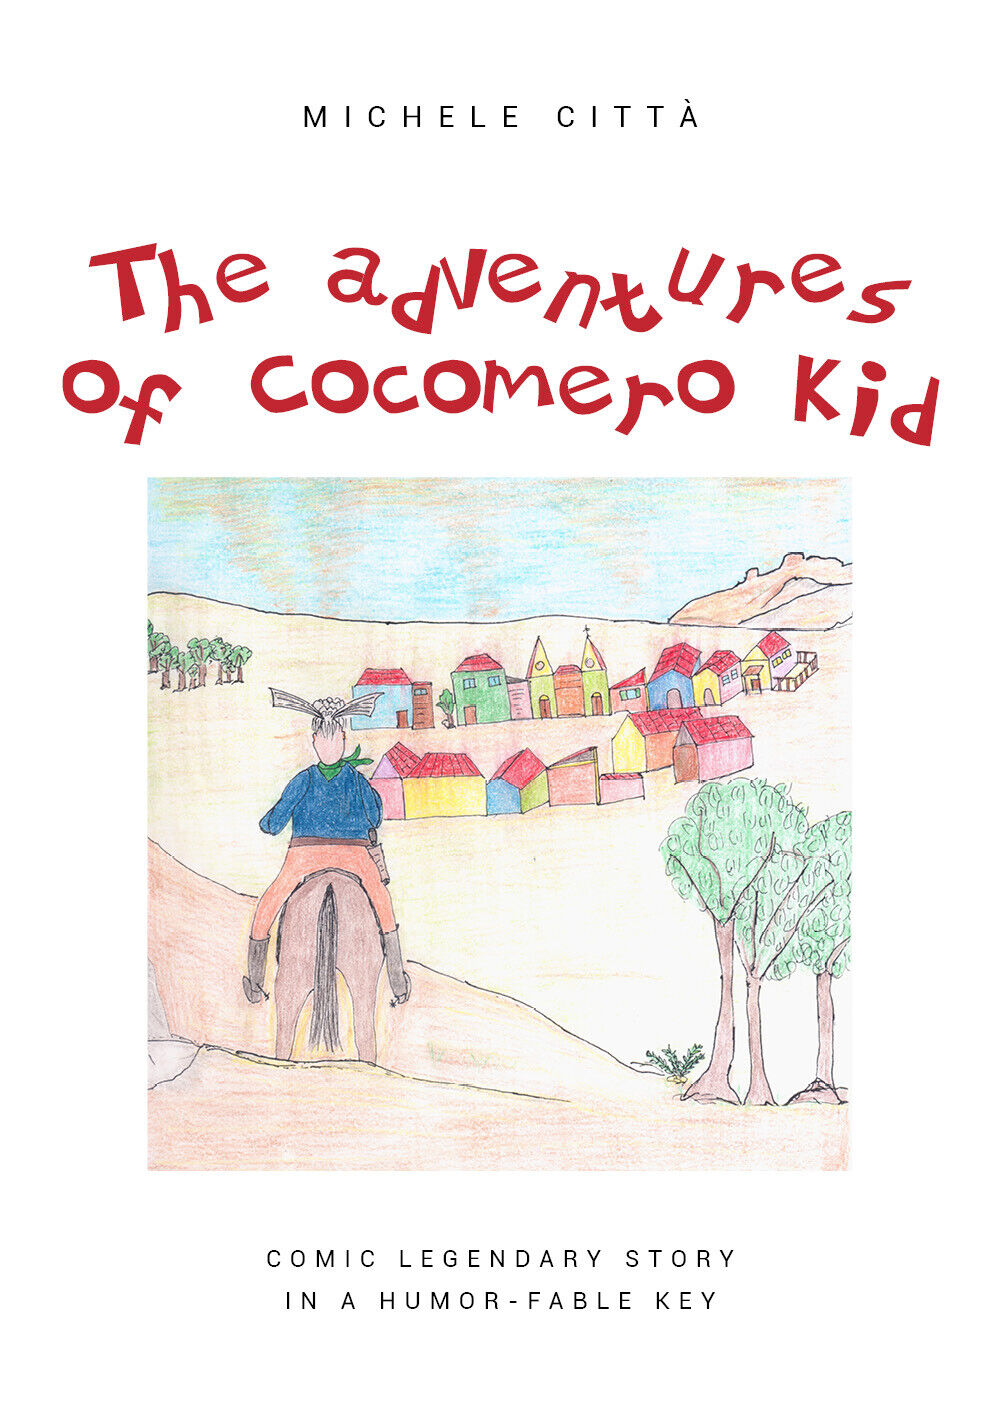   The adventures of Cocomero Kid - Michele Citt?,  2020,  Youcanprint